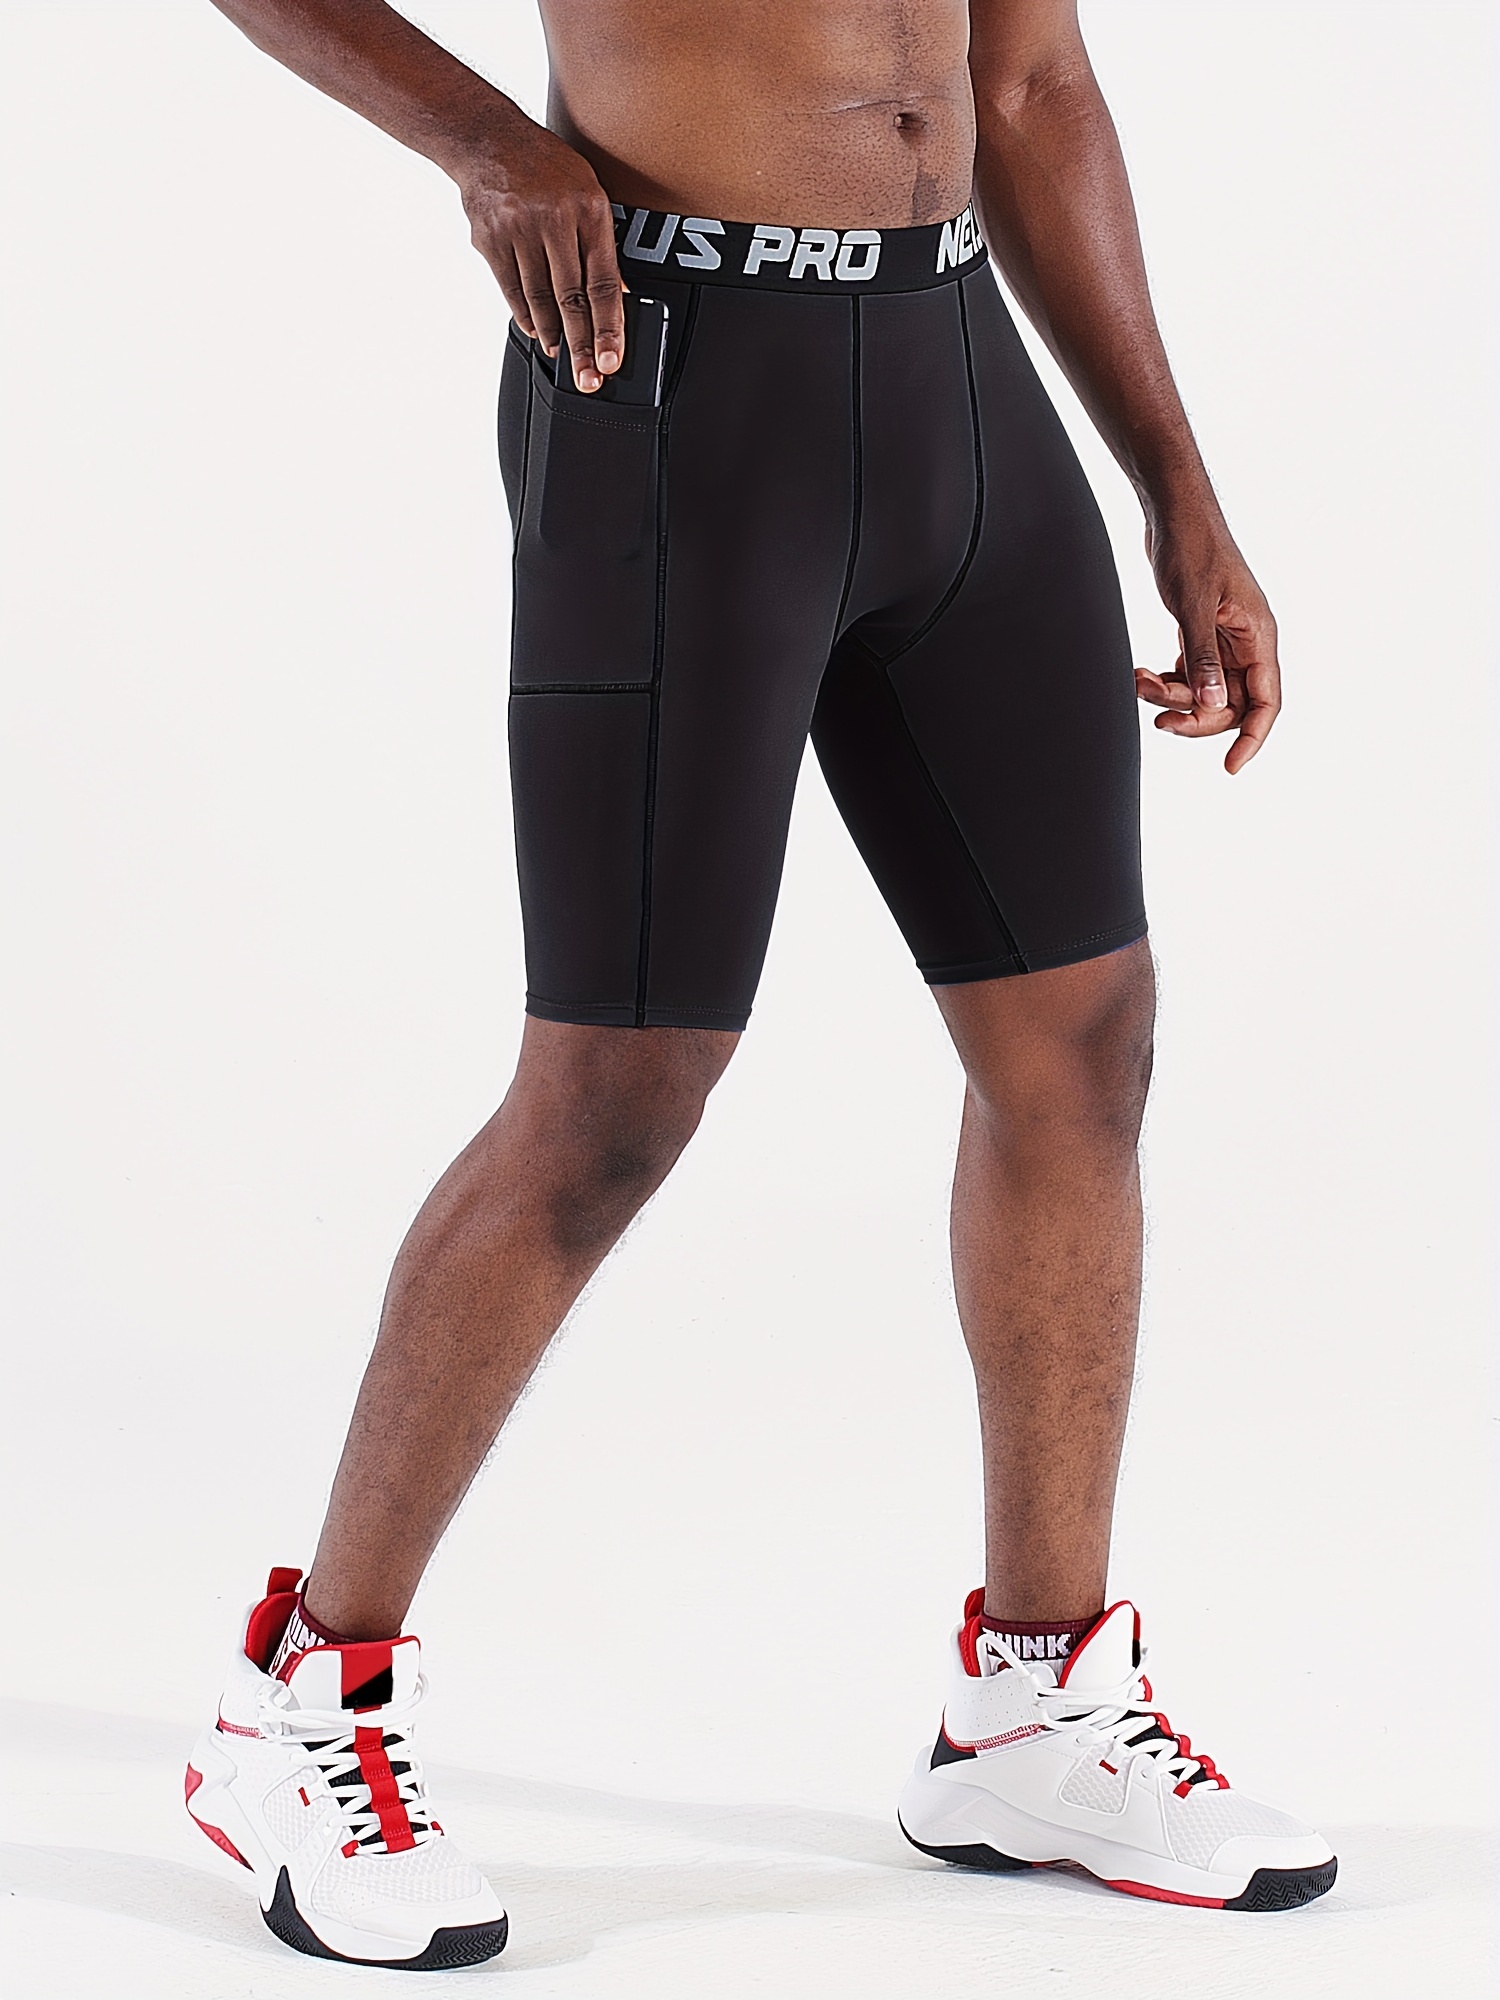 USA Pro Gym Shorts, Leggings & Capris